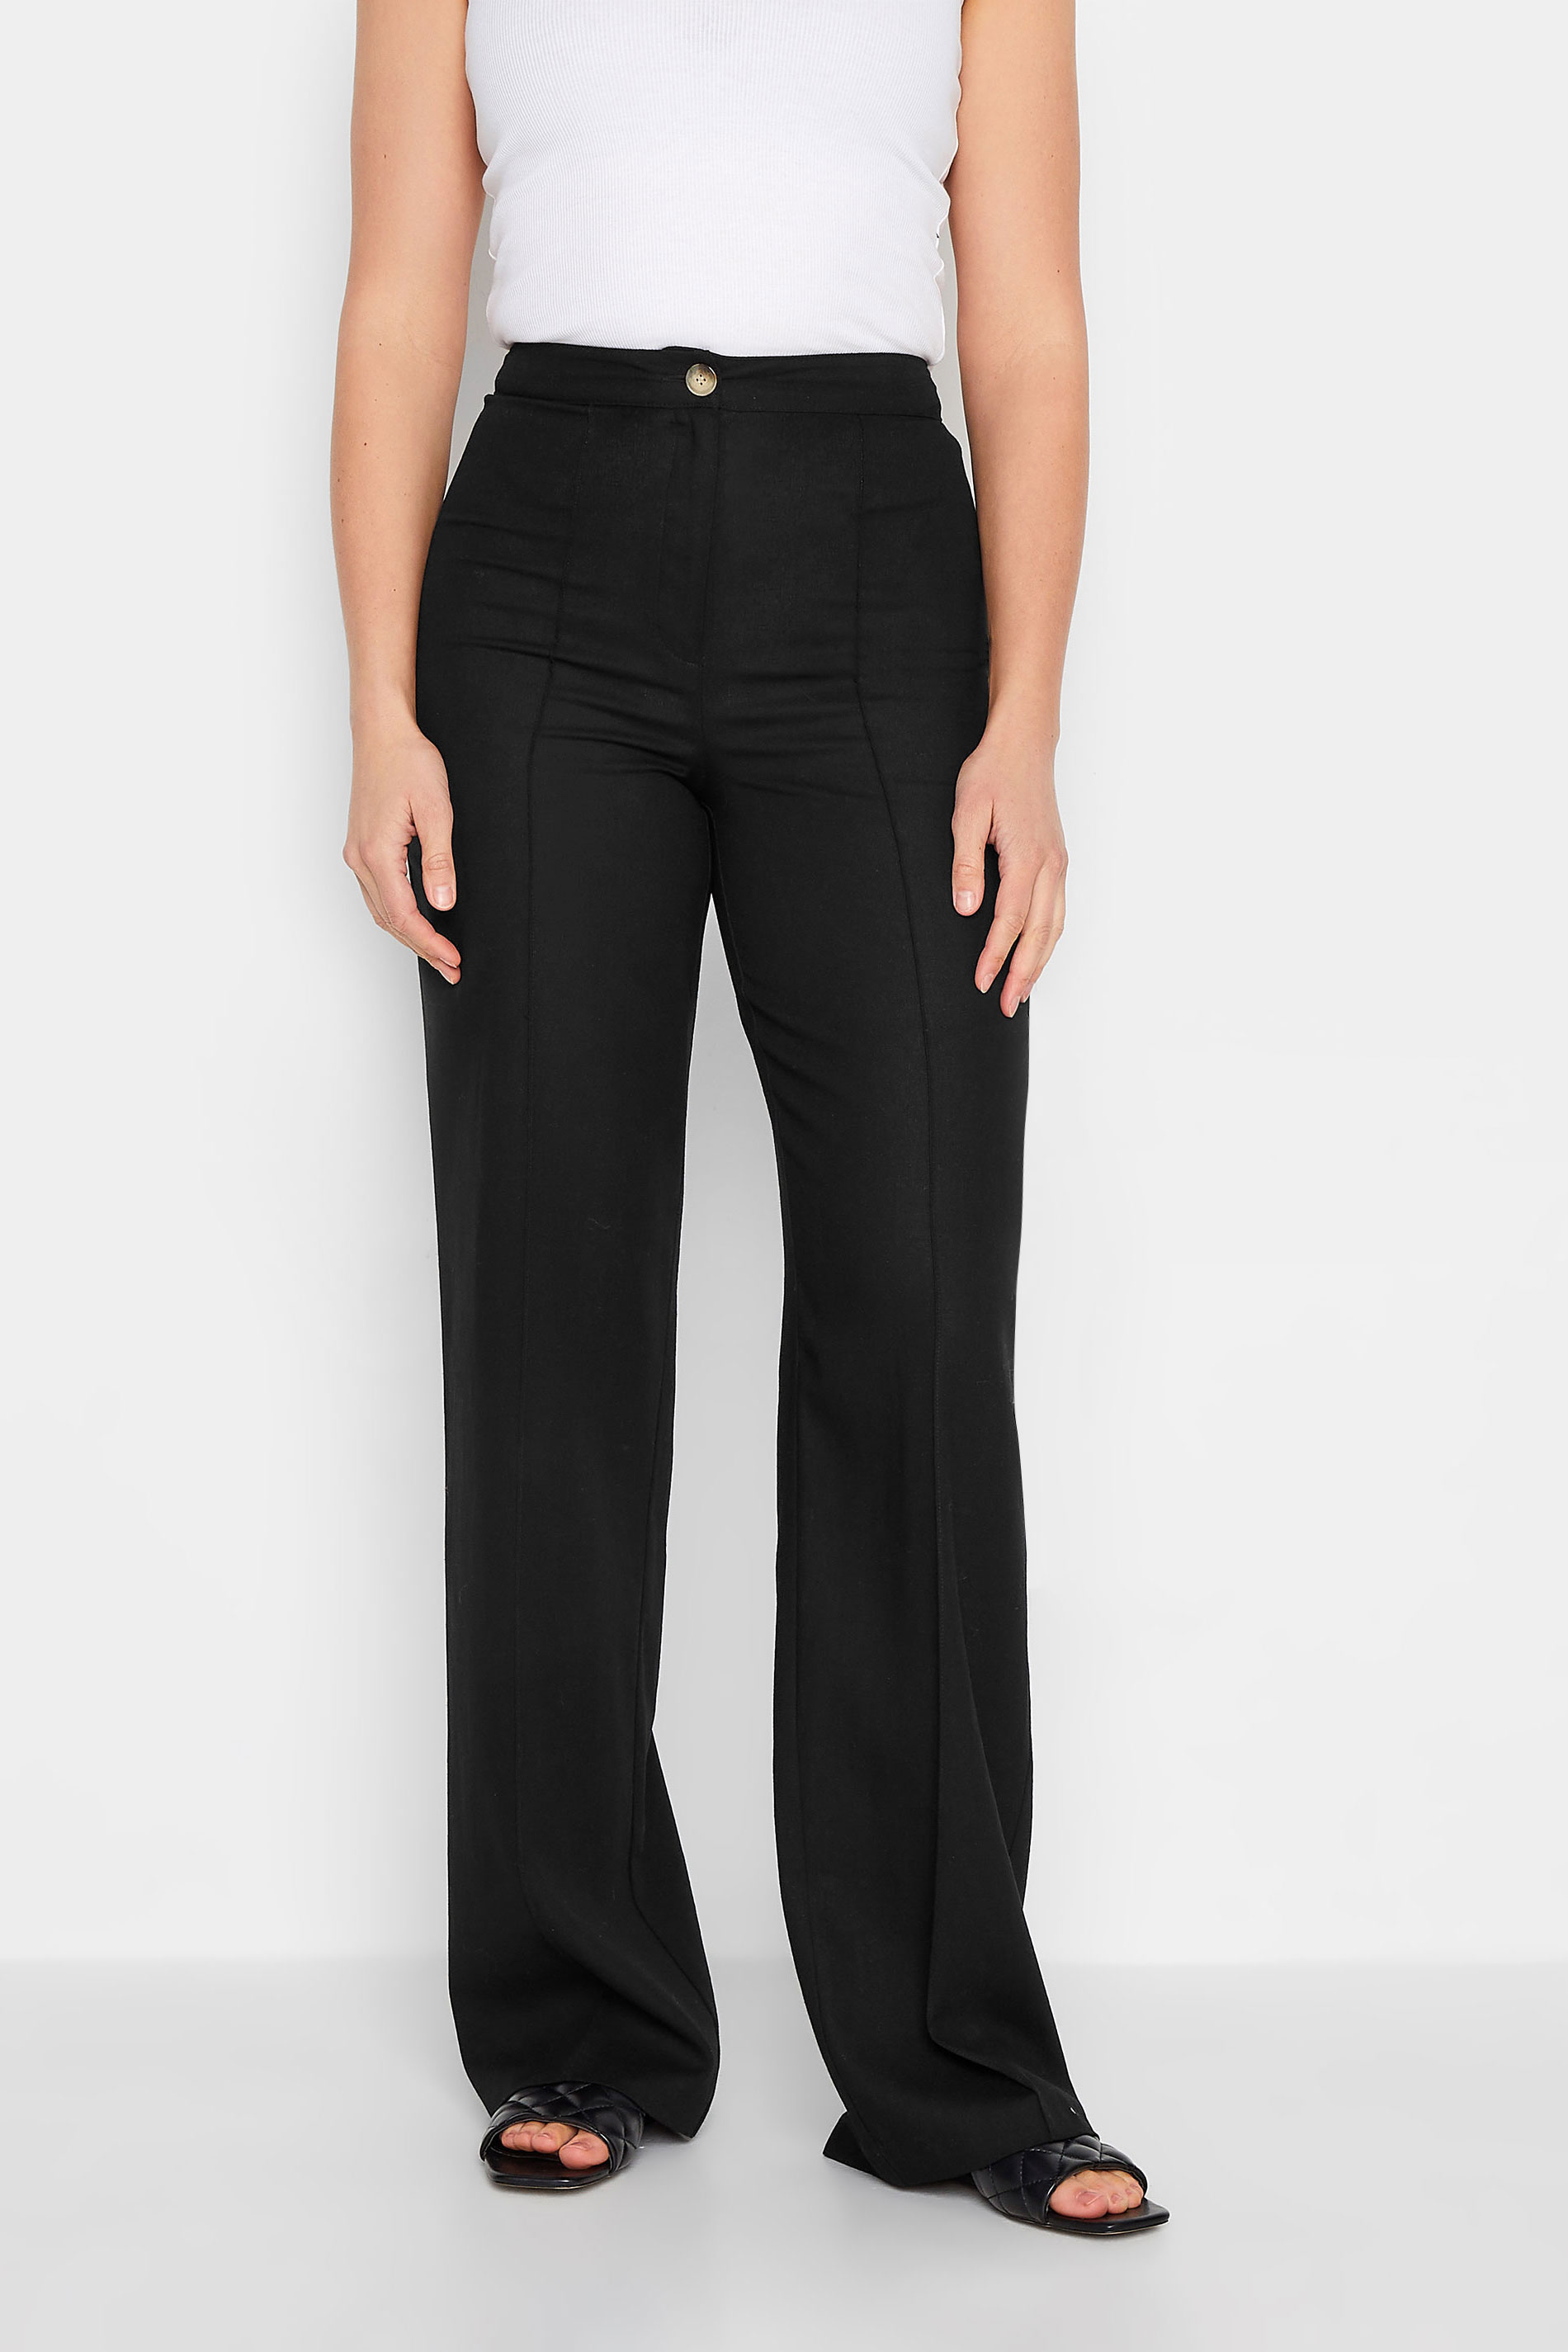 LTS Tall Black Linen Trousers | Long Tall Sally  1